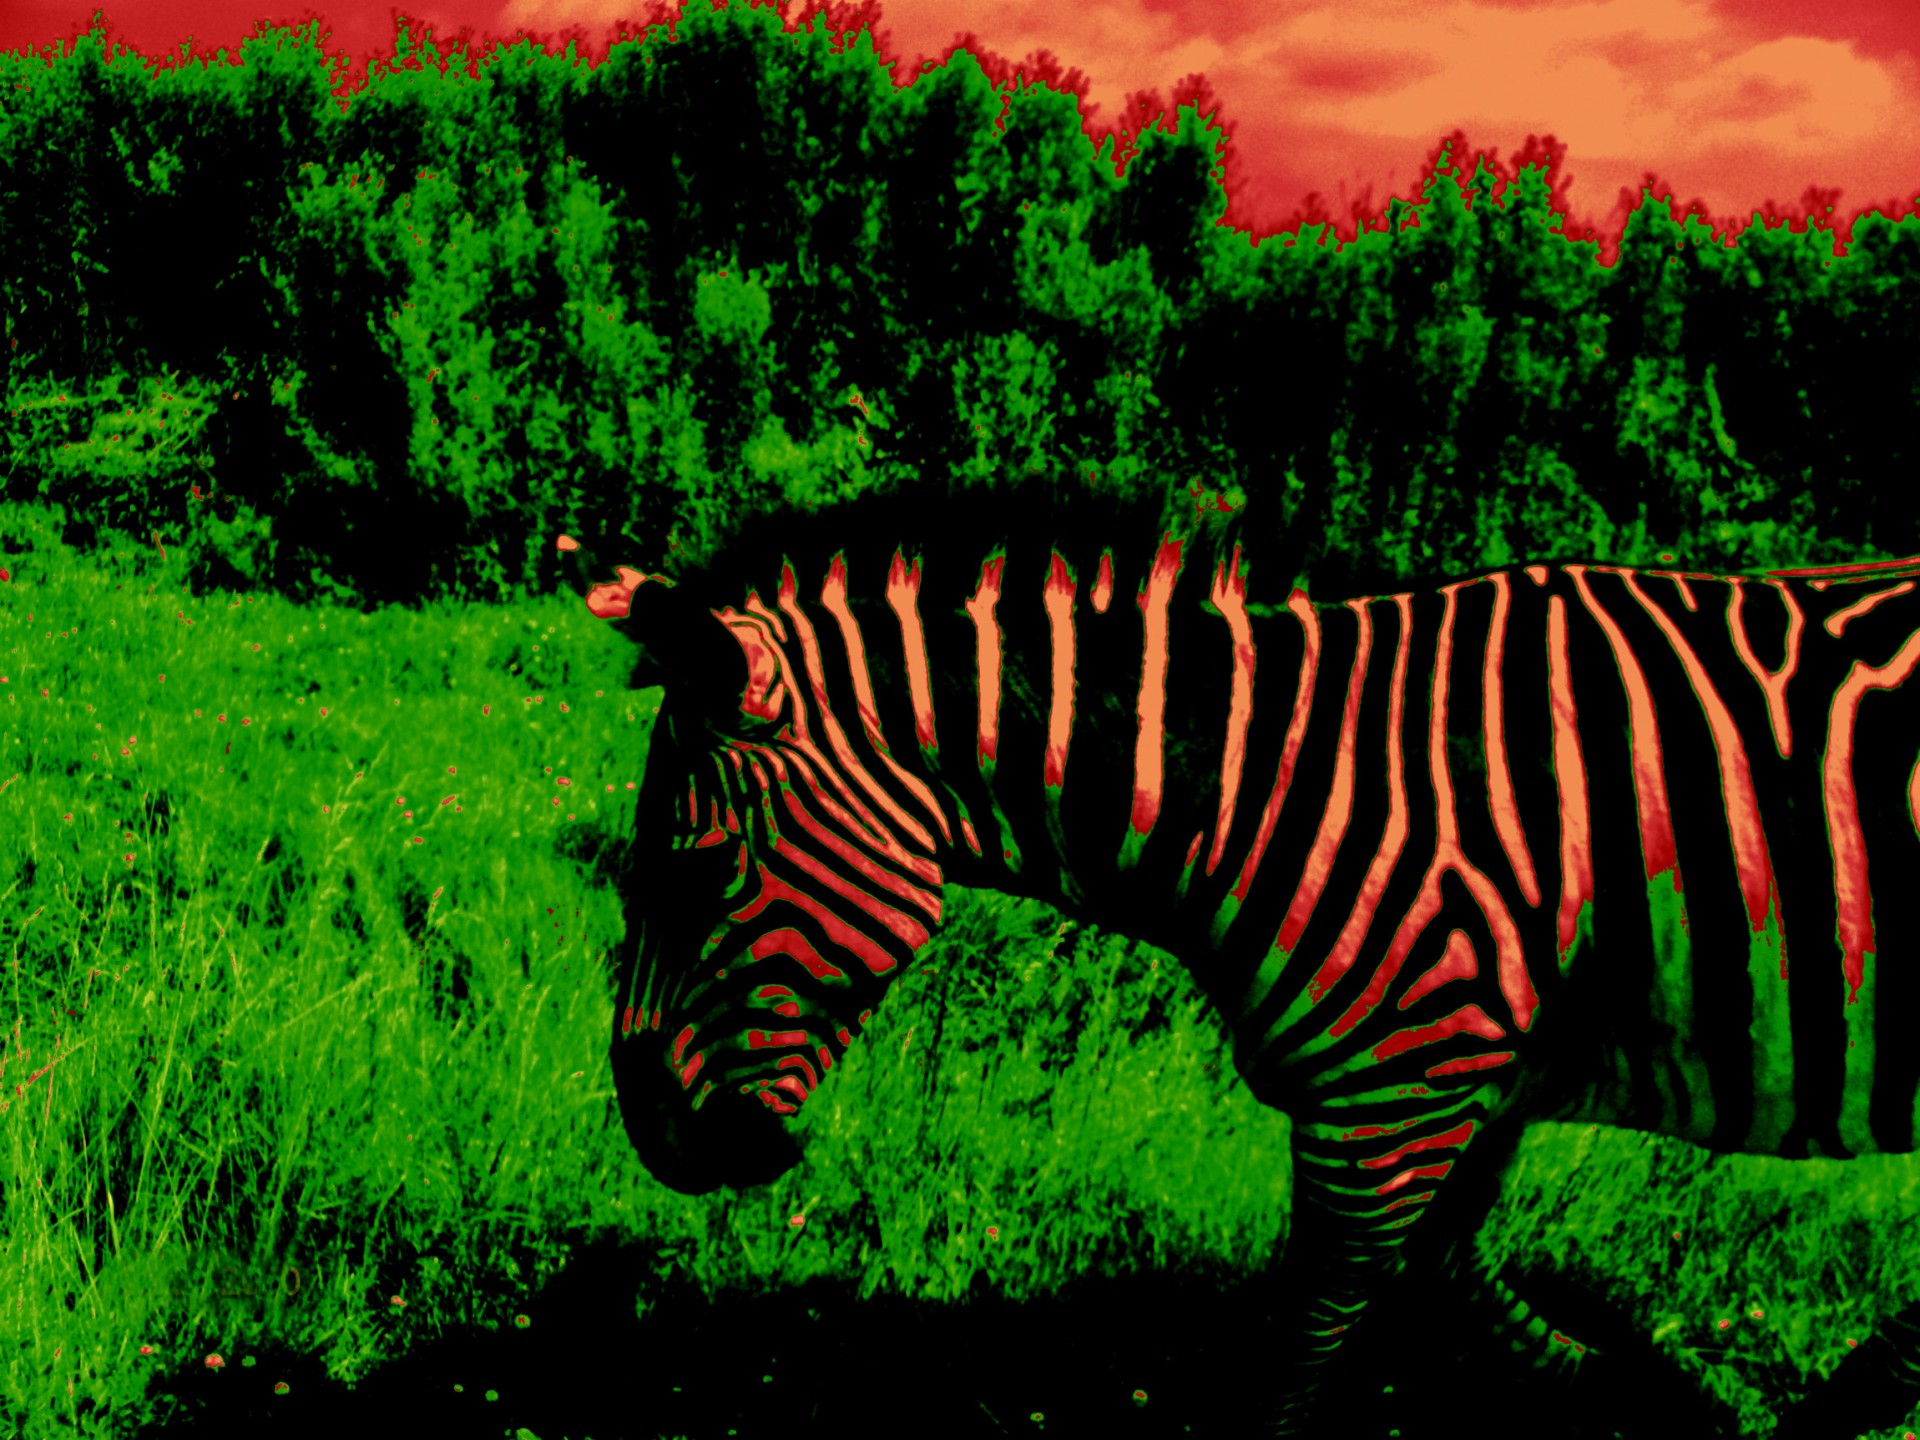 Gyvūnas,  Zebra,  Posterizuotas Zebras # 1, Nemokamos Nuotraukos,  Nemokama Licenzija